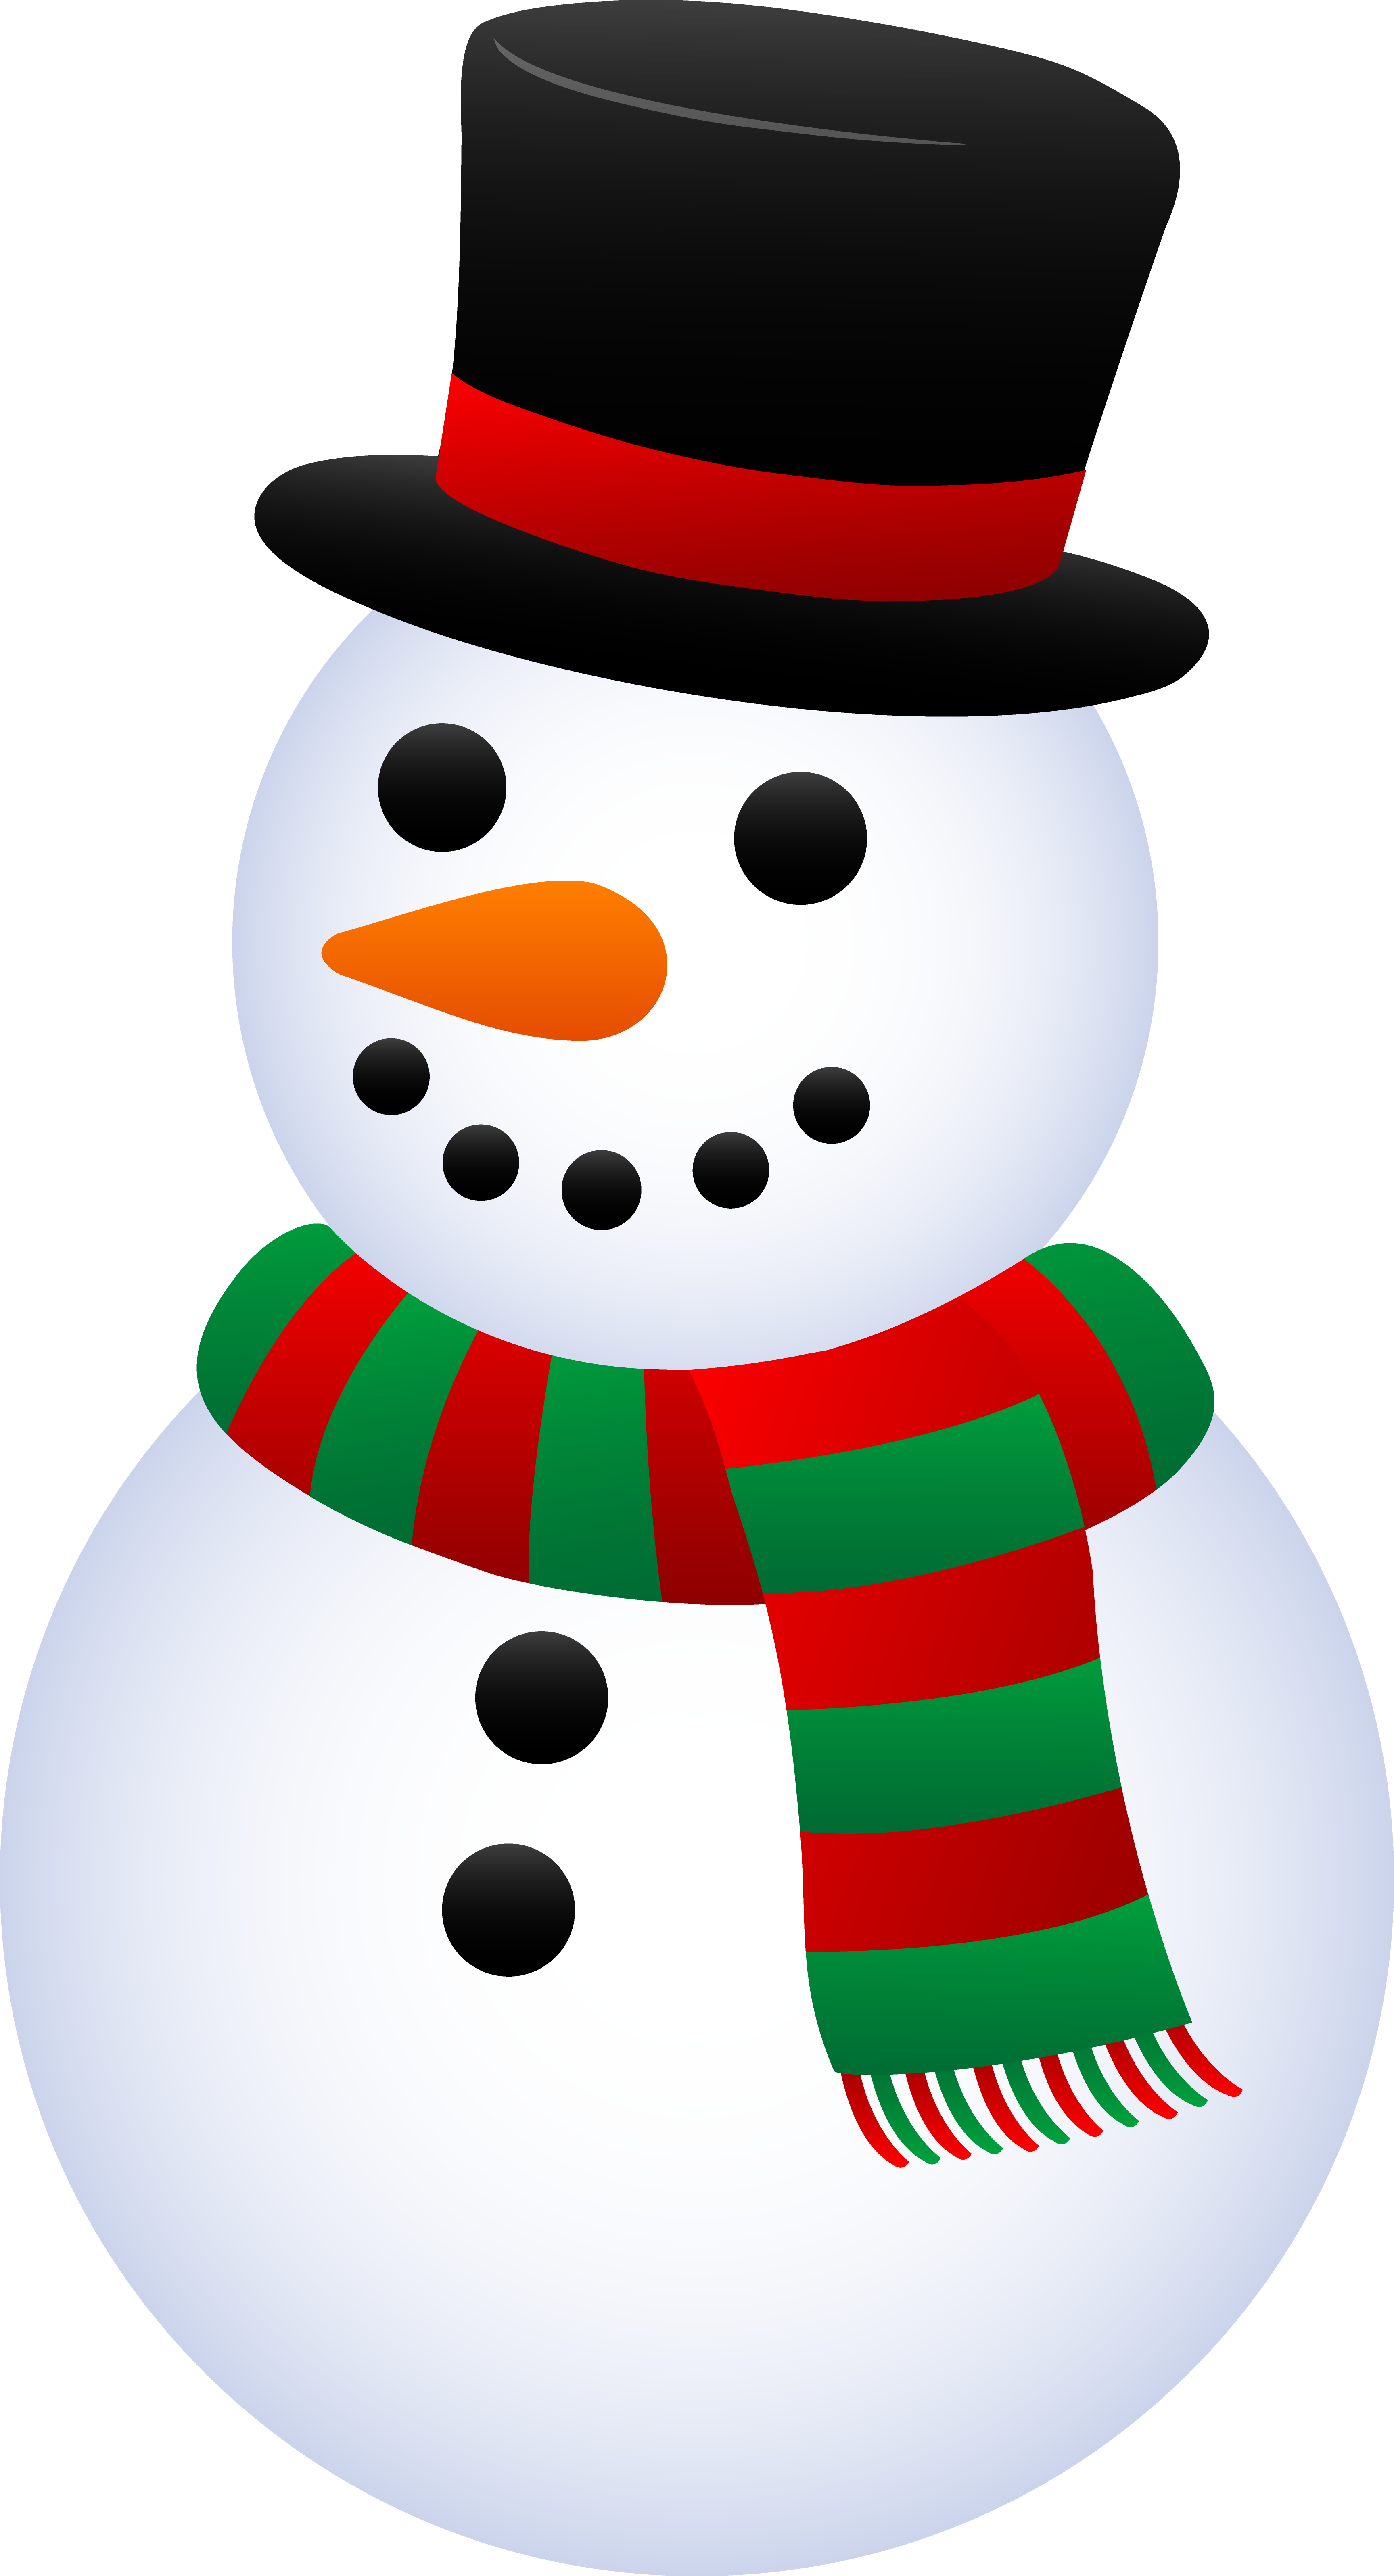 Images of Snowman | 3455x6386